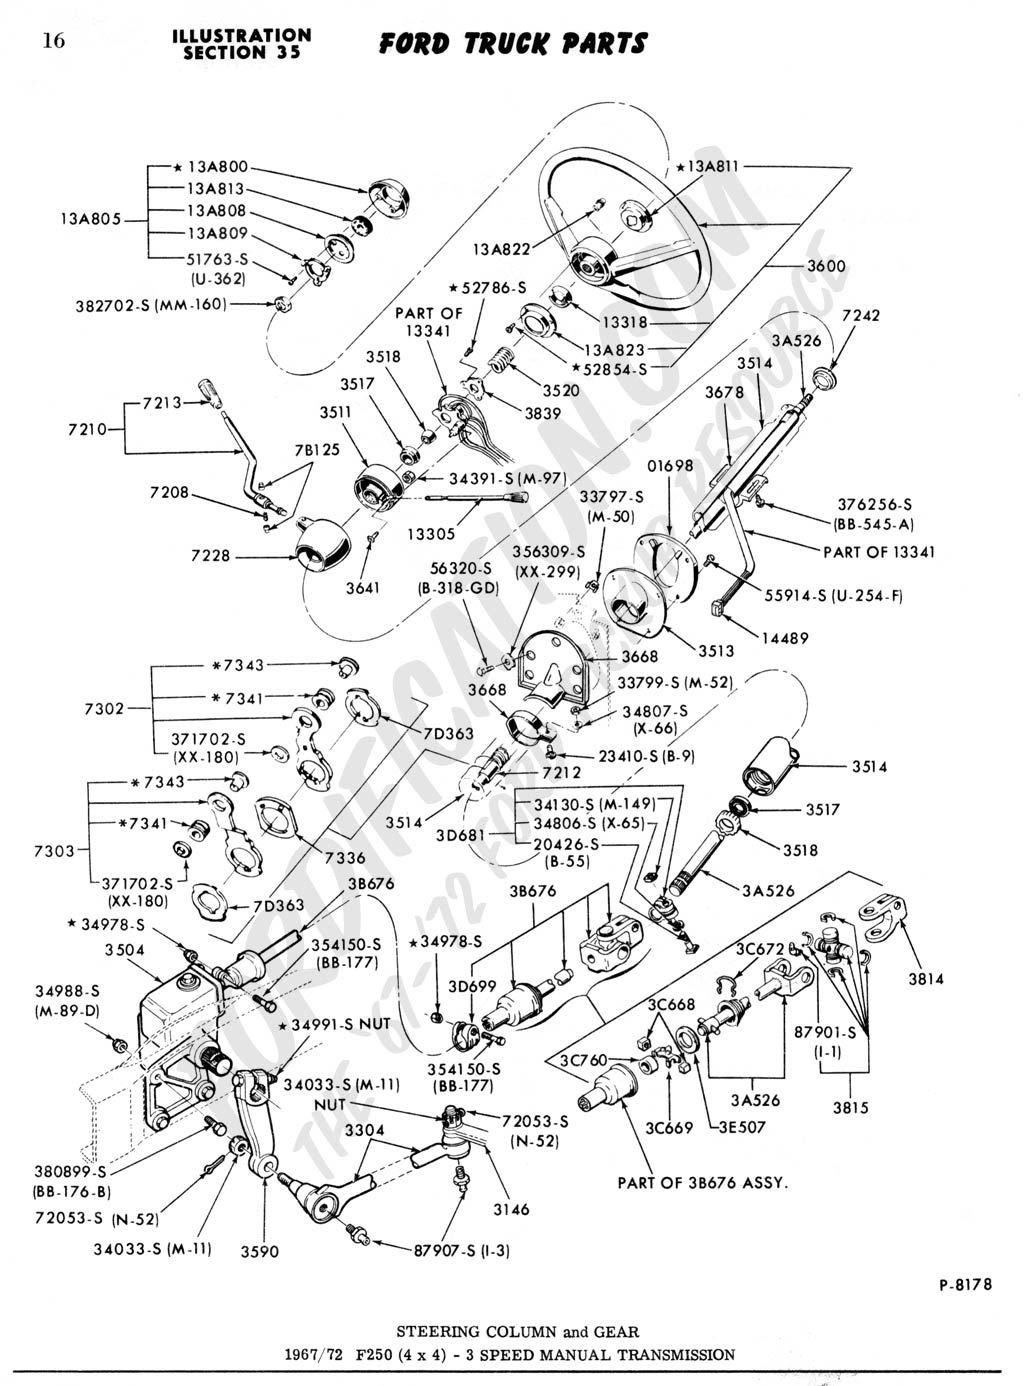 1996 Ford f250 steering column diagram